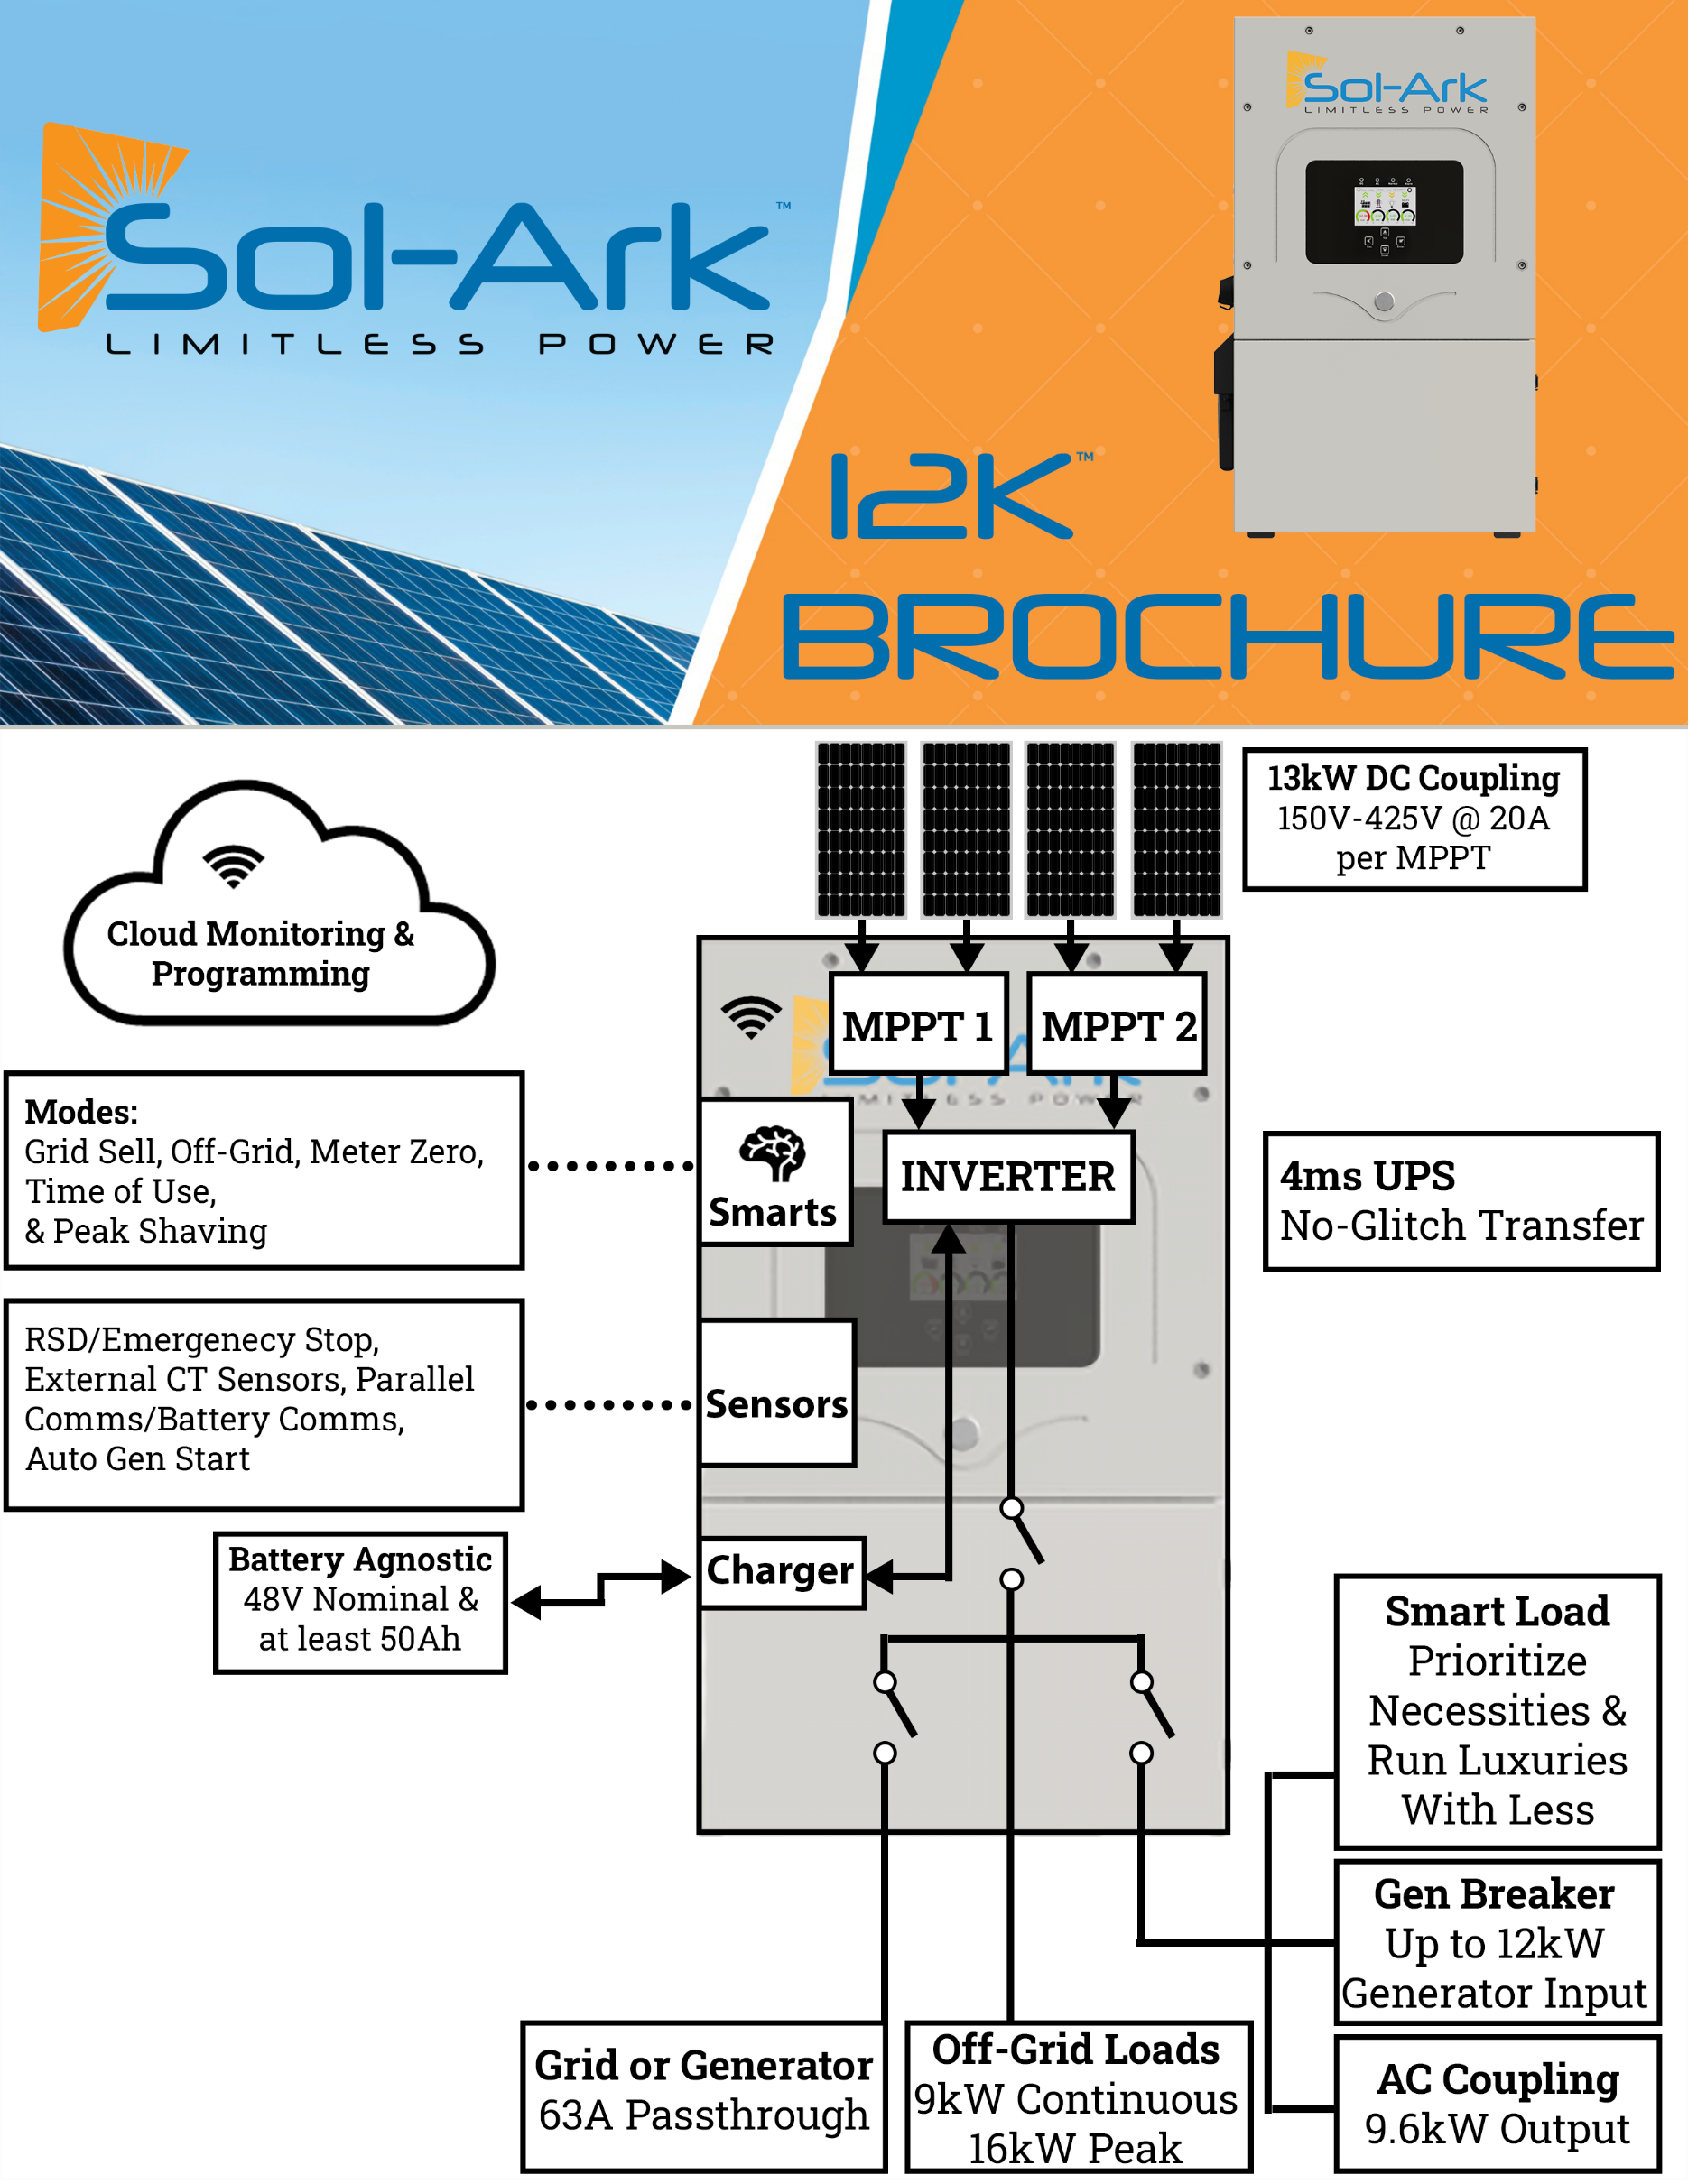 Sol-Ark Limitless 15K-LV - Inverter Supply